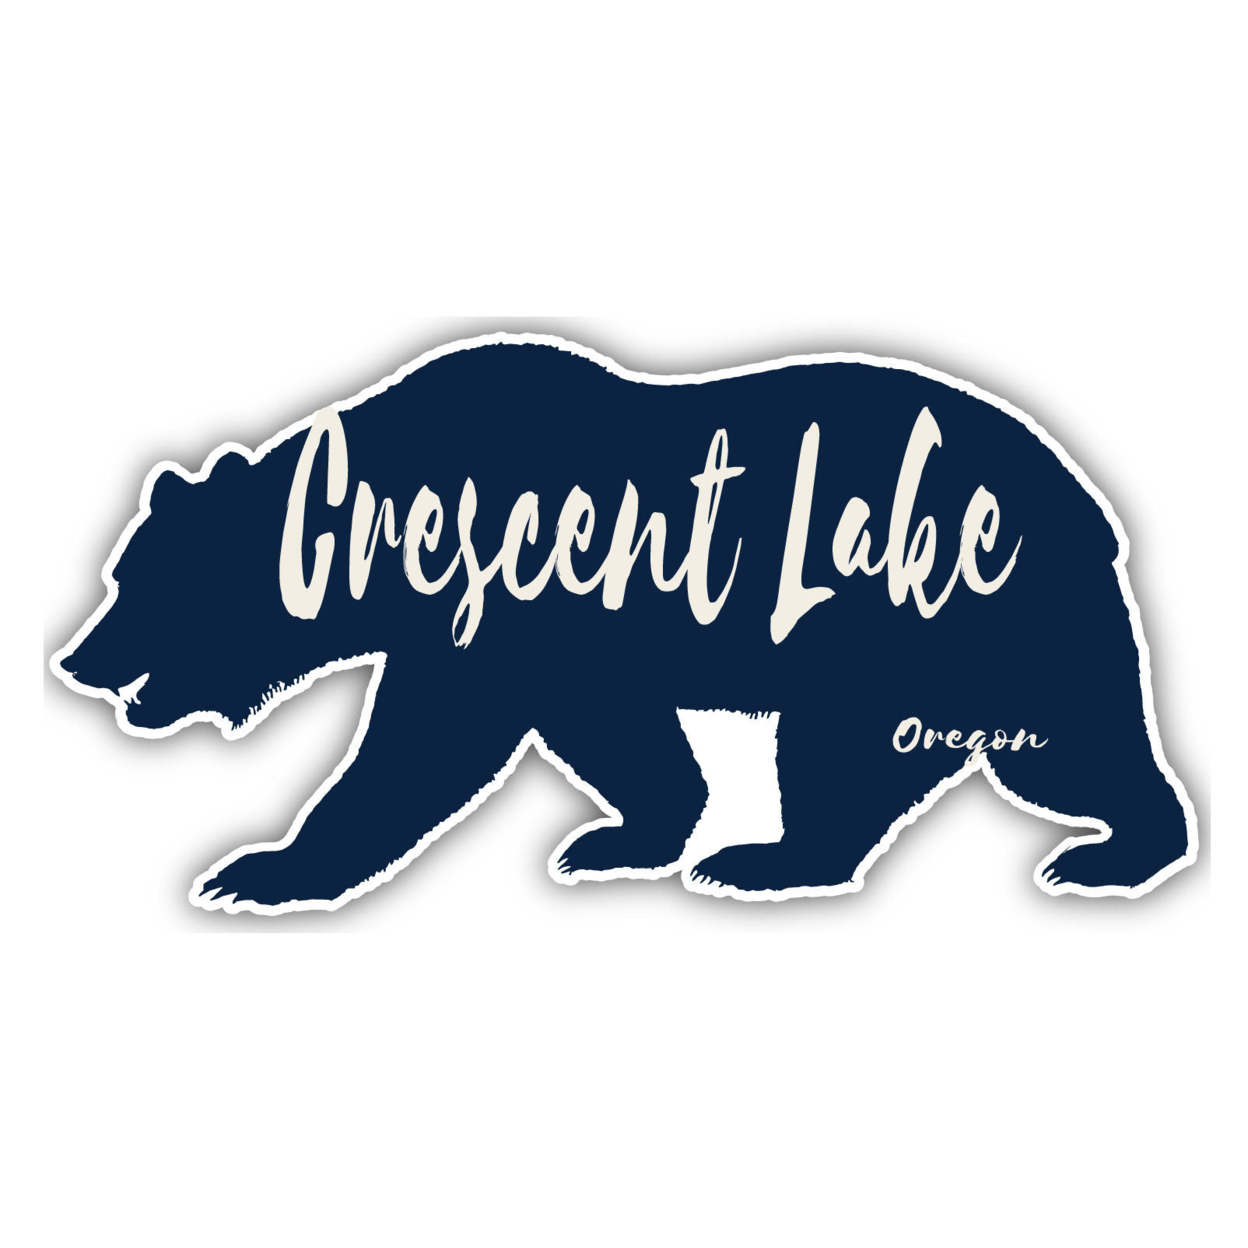 Crescent Lake Oregon Souvenir Decorative Stickers (Choose Theme And Size) - 4-Pack, 8-Inch, Bear